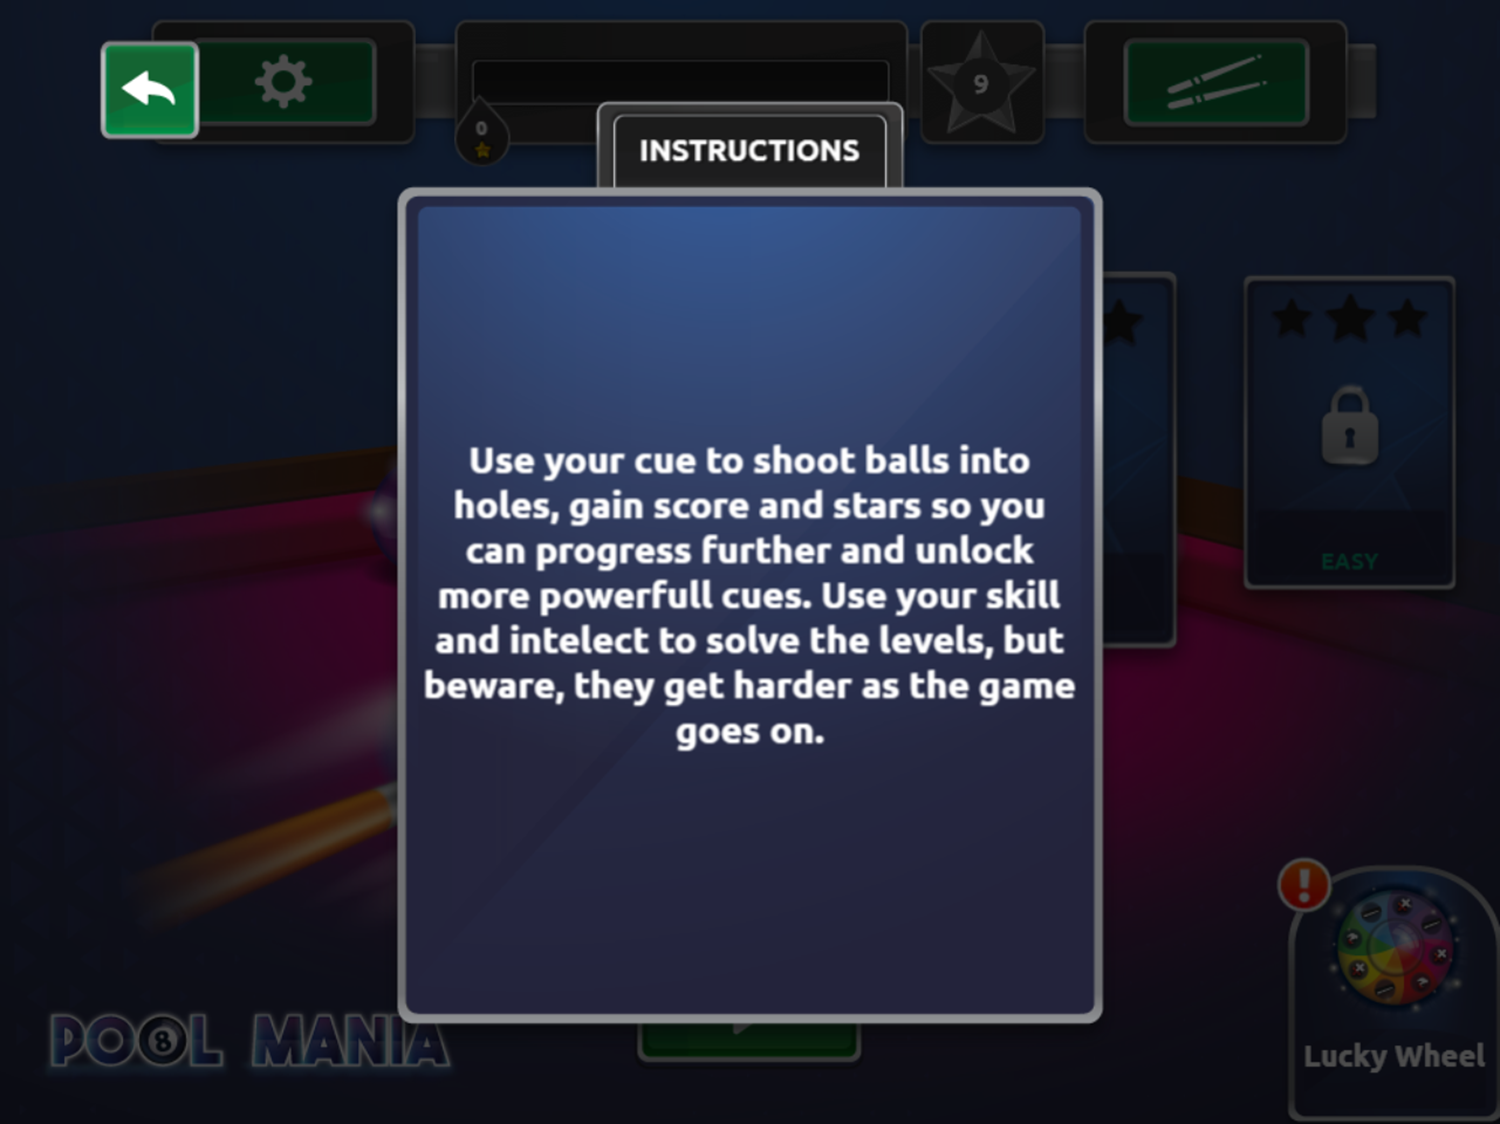 Pool Mania Game Instructions Screenshot.